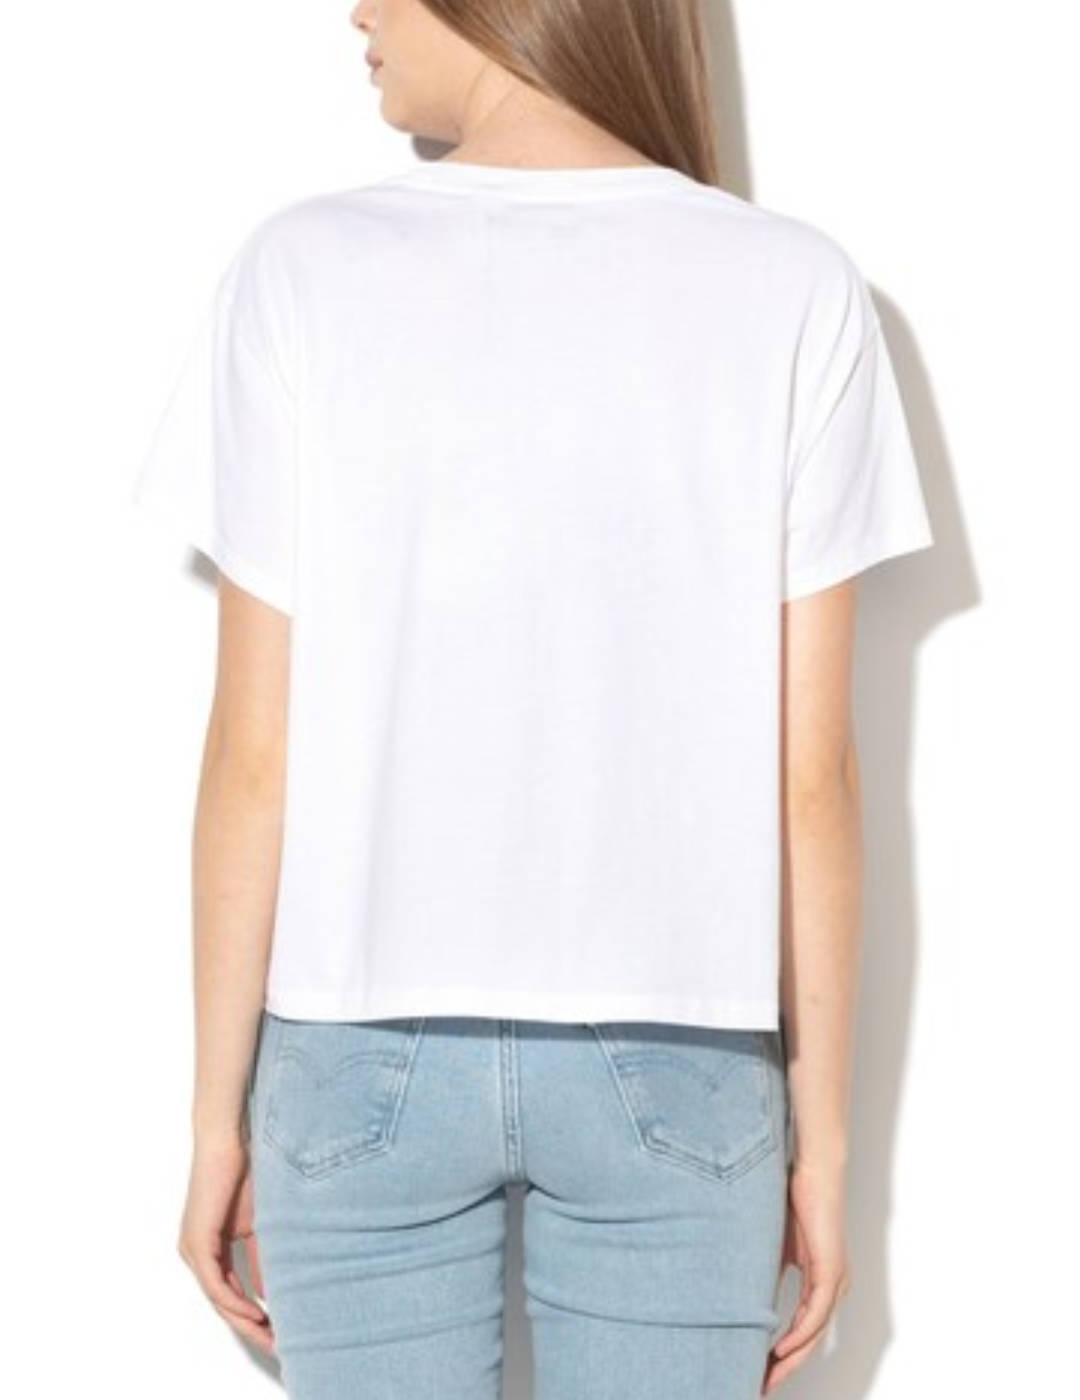 Camiseta Levi´s Graphic blanco manga corta para mujer